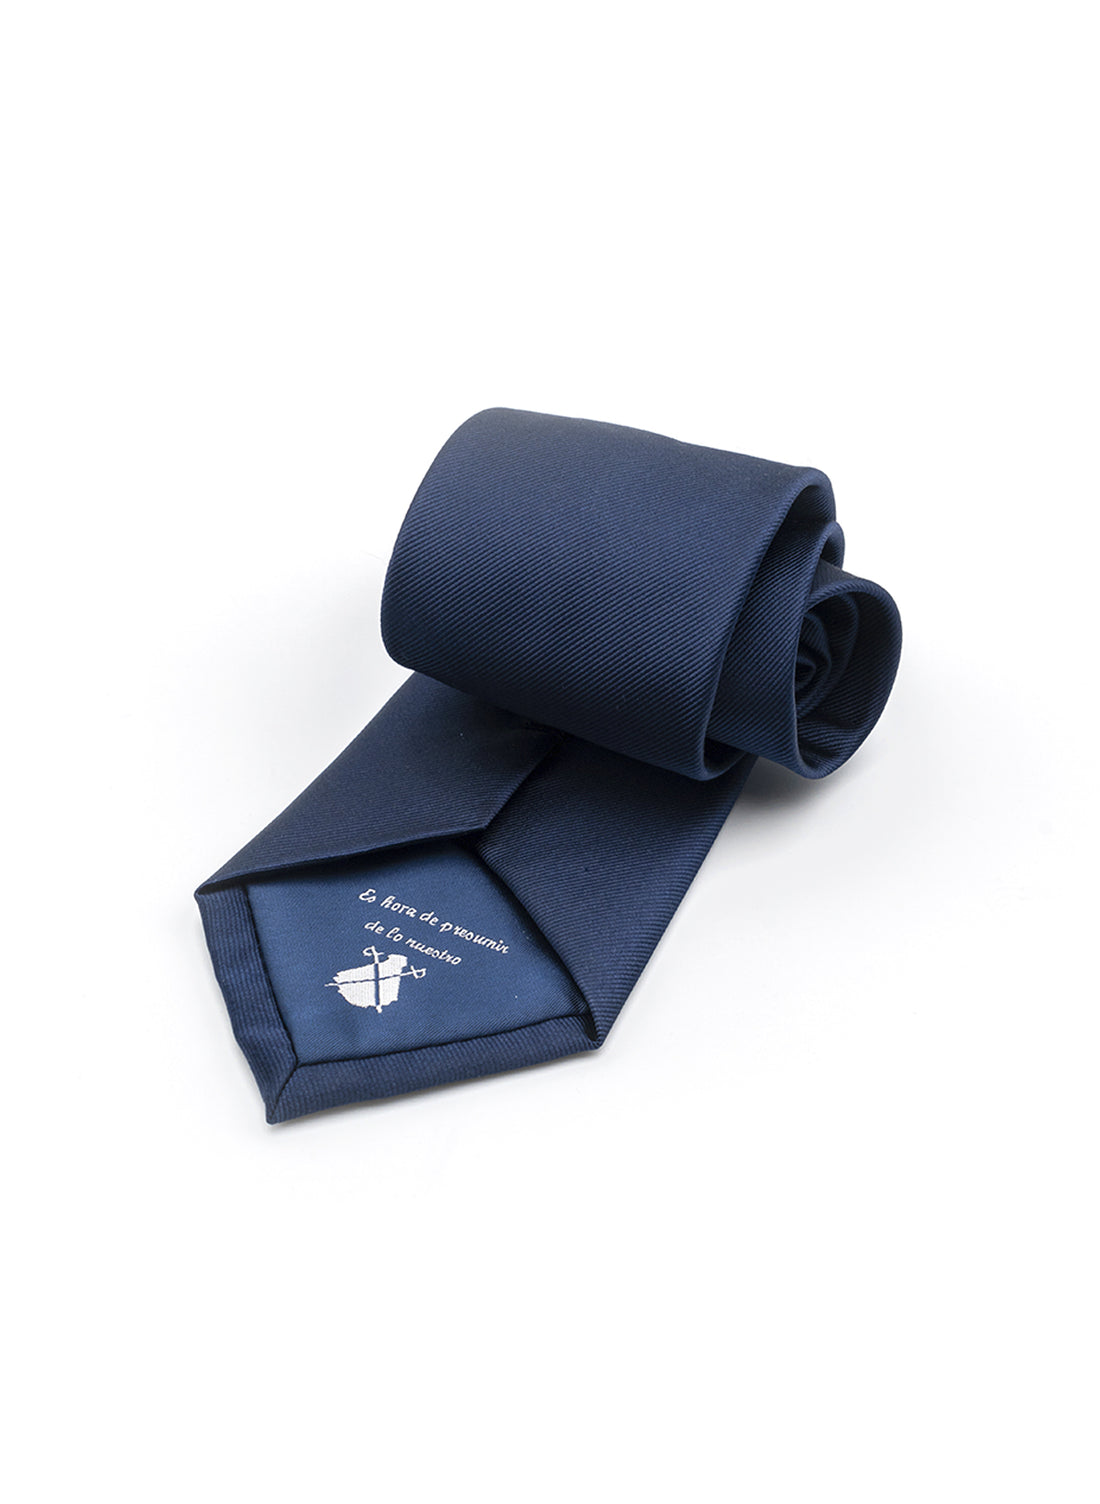 Cravate Bleu Marine Logo Blanc